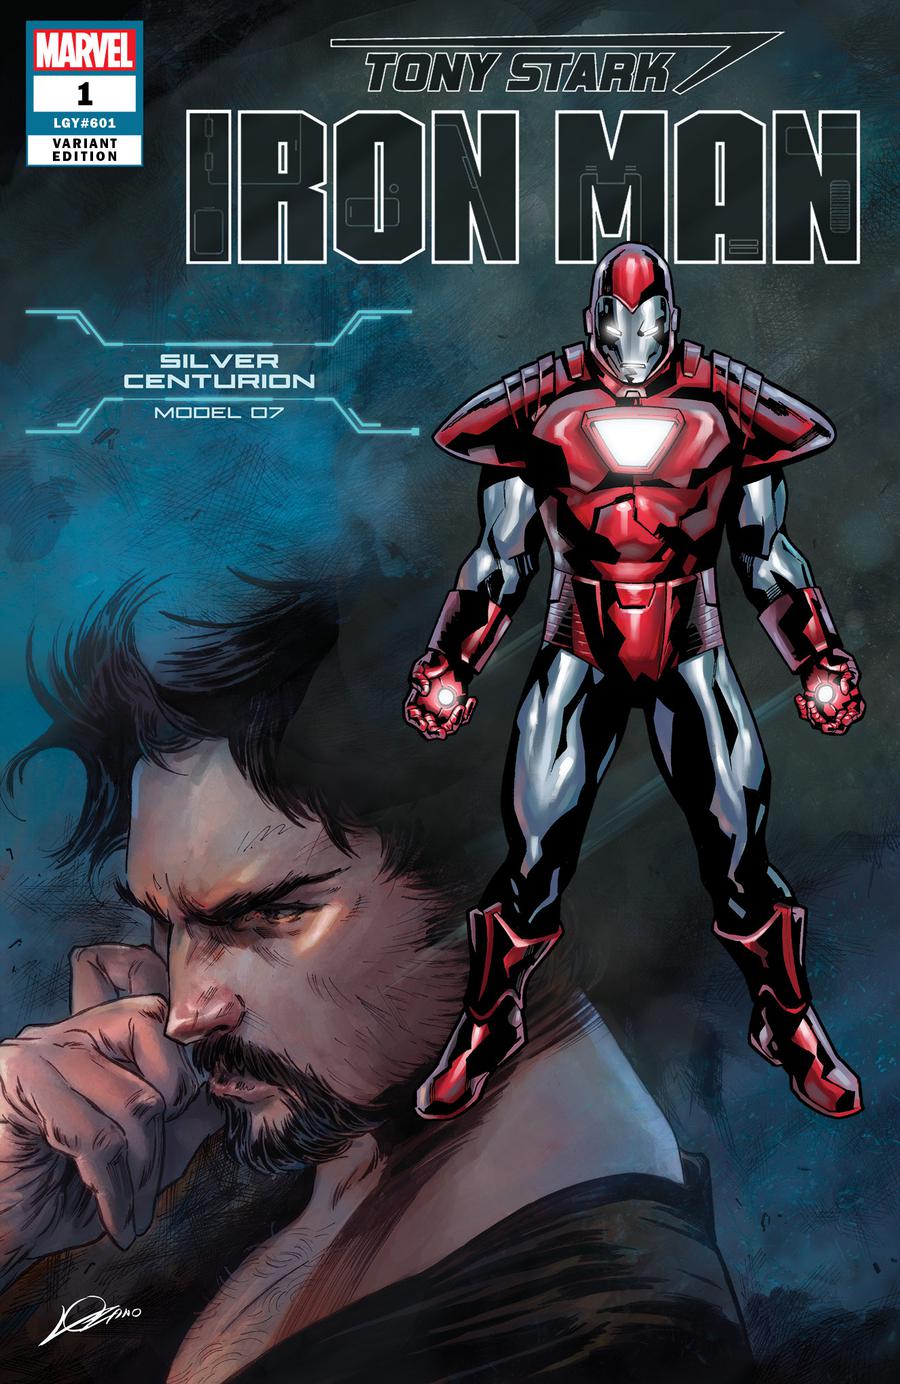 Tony Stark Iron Man #1 Cover P Variant Alexander Lozano & Valerio Schiti Model 07 Silver Centurion Armor Cover